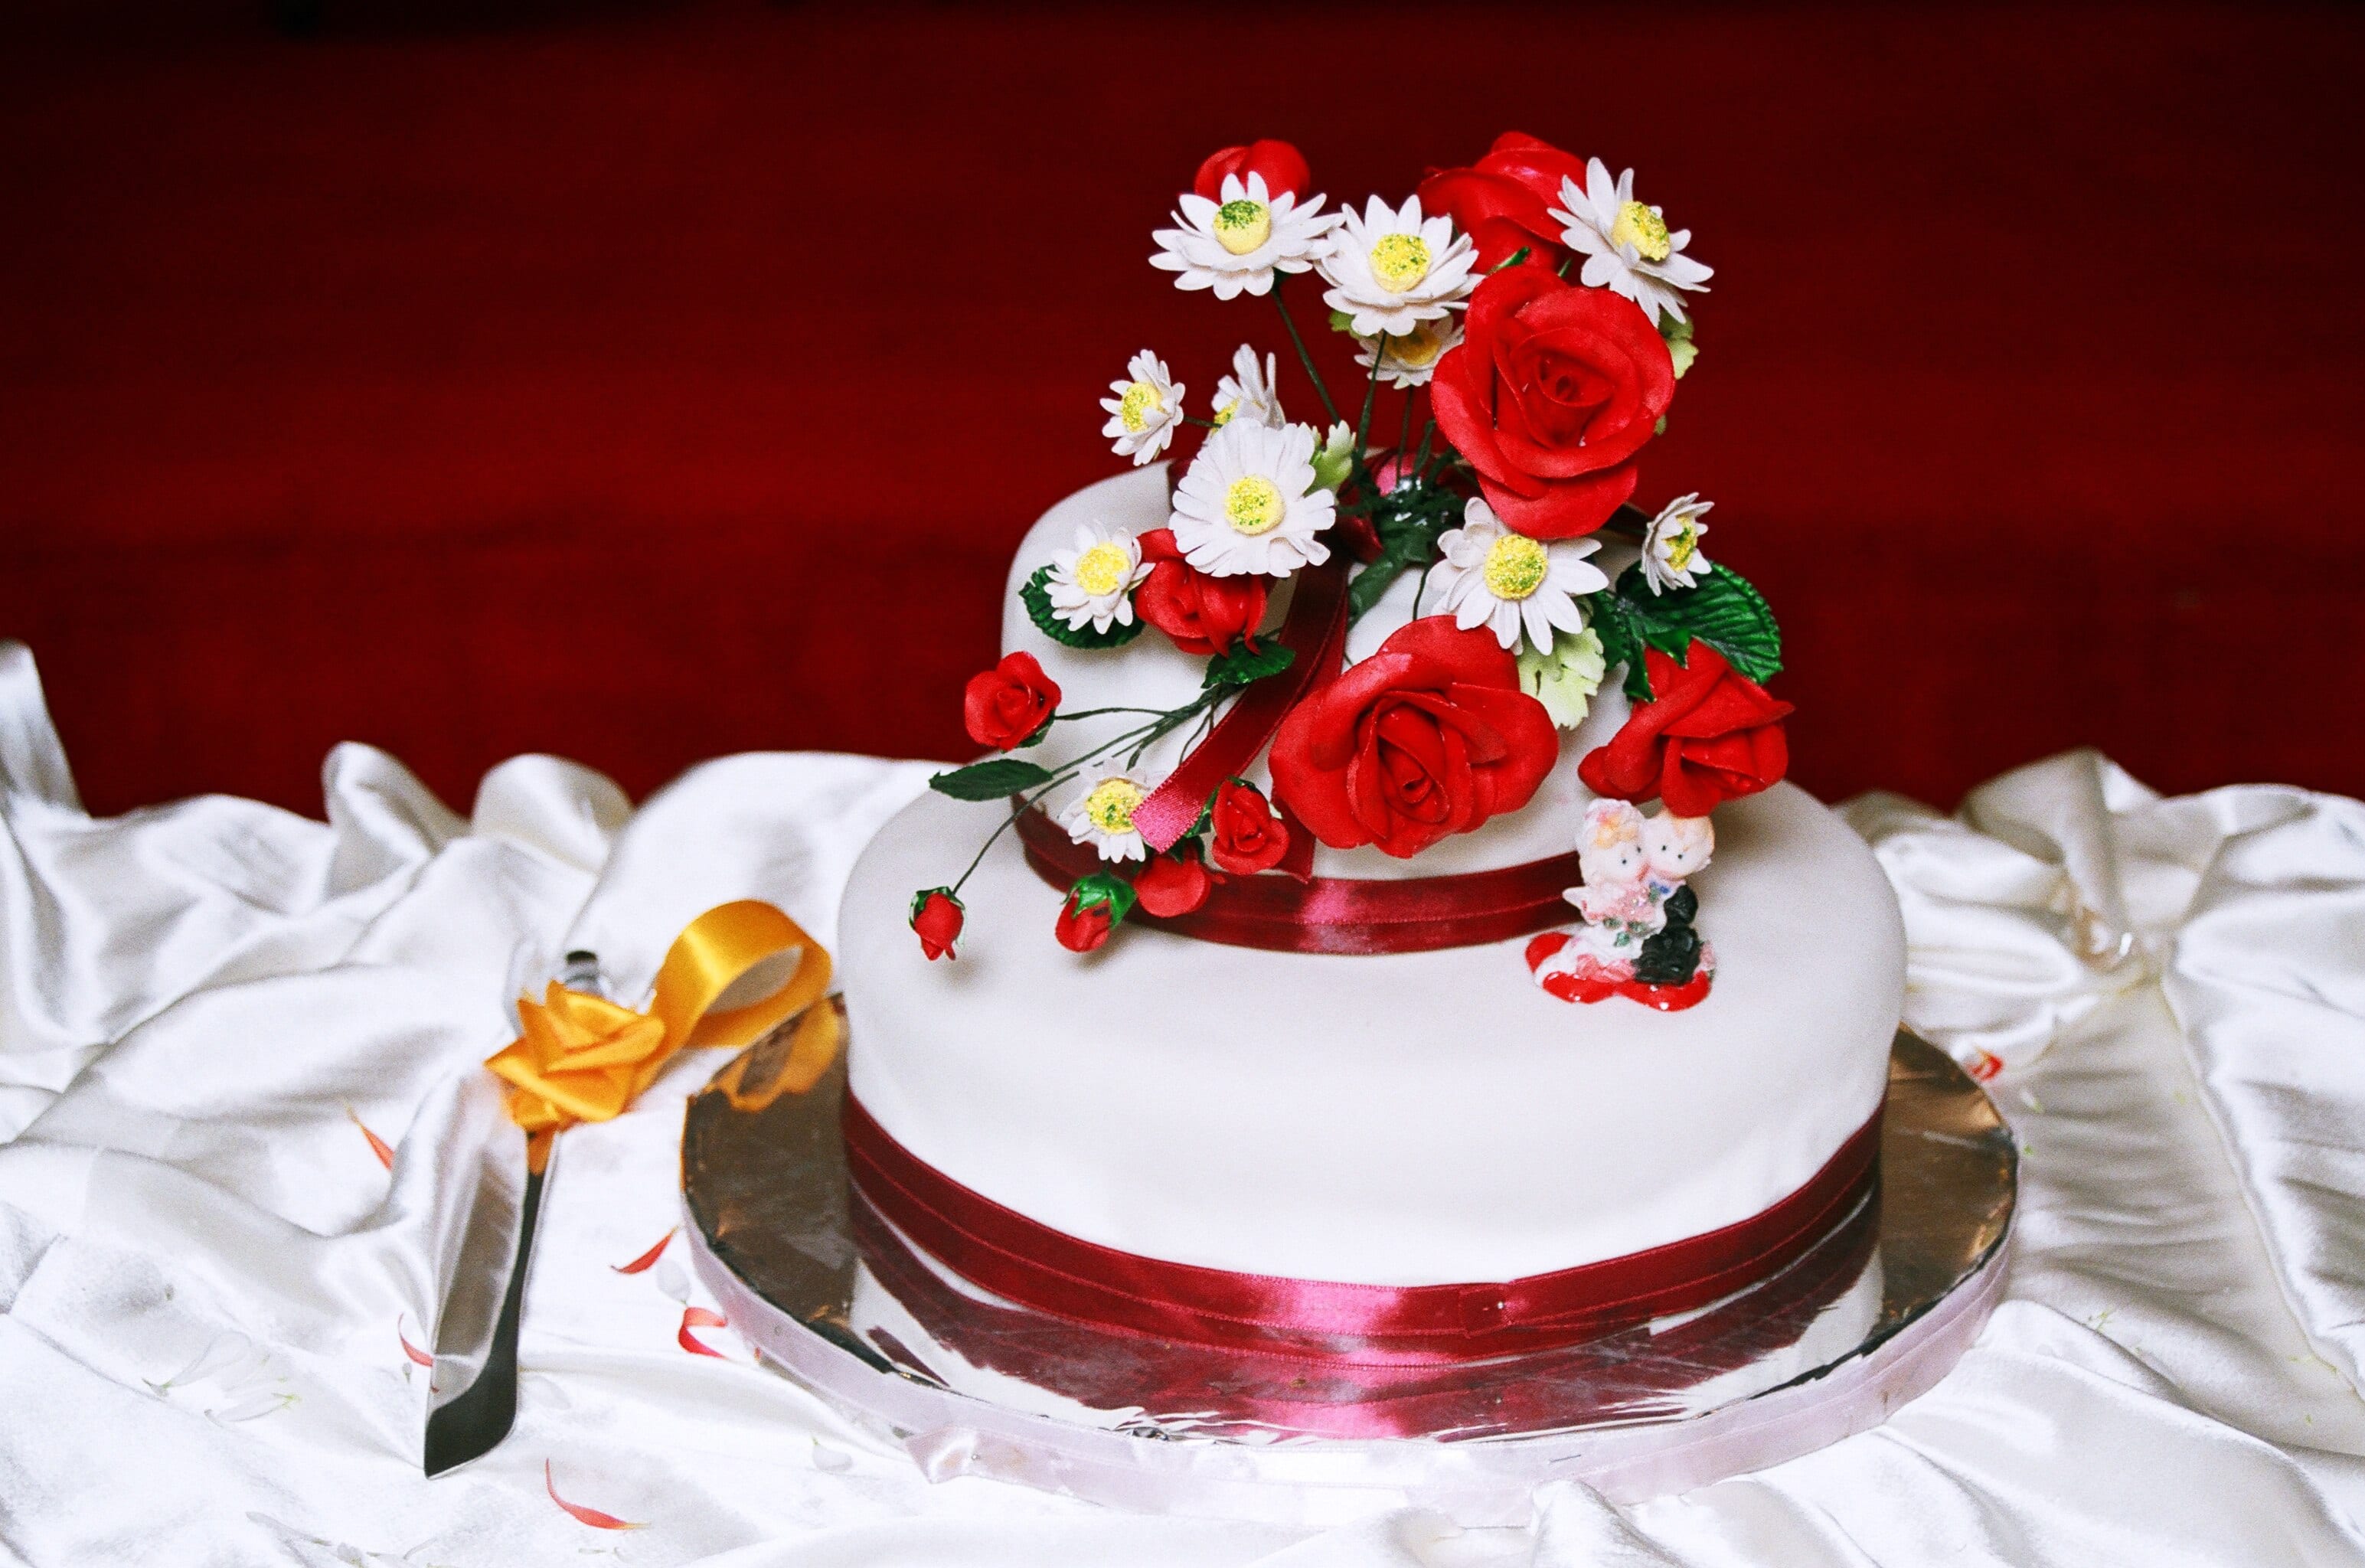 Zibatreats Blog Posts - Talks about Custom Cakes, Birthday Celebration,  Anniversary, Work Events... | Organic, Low-Sugar, Custom Cakes